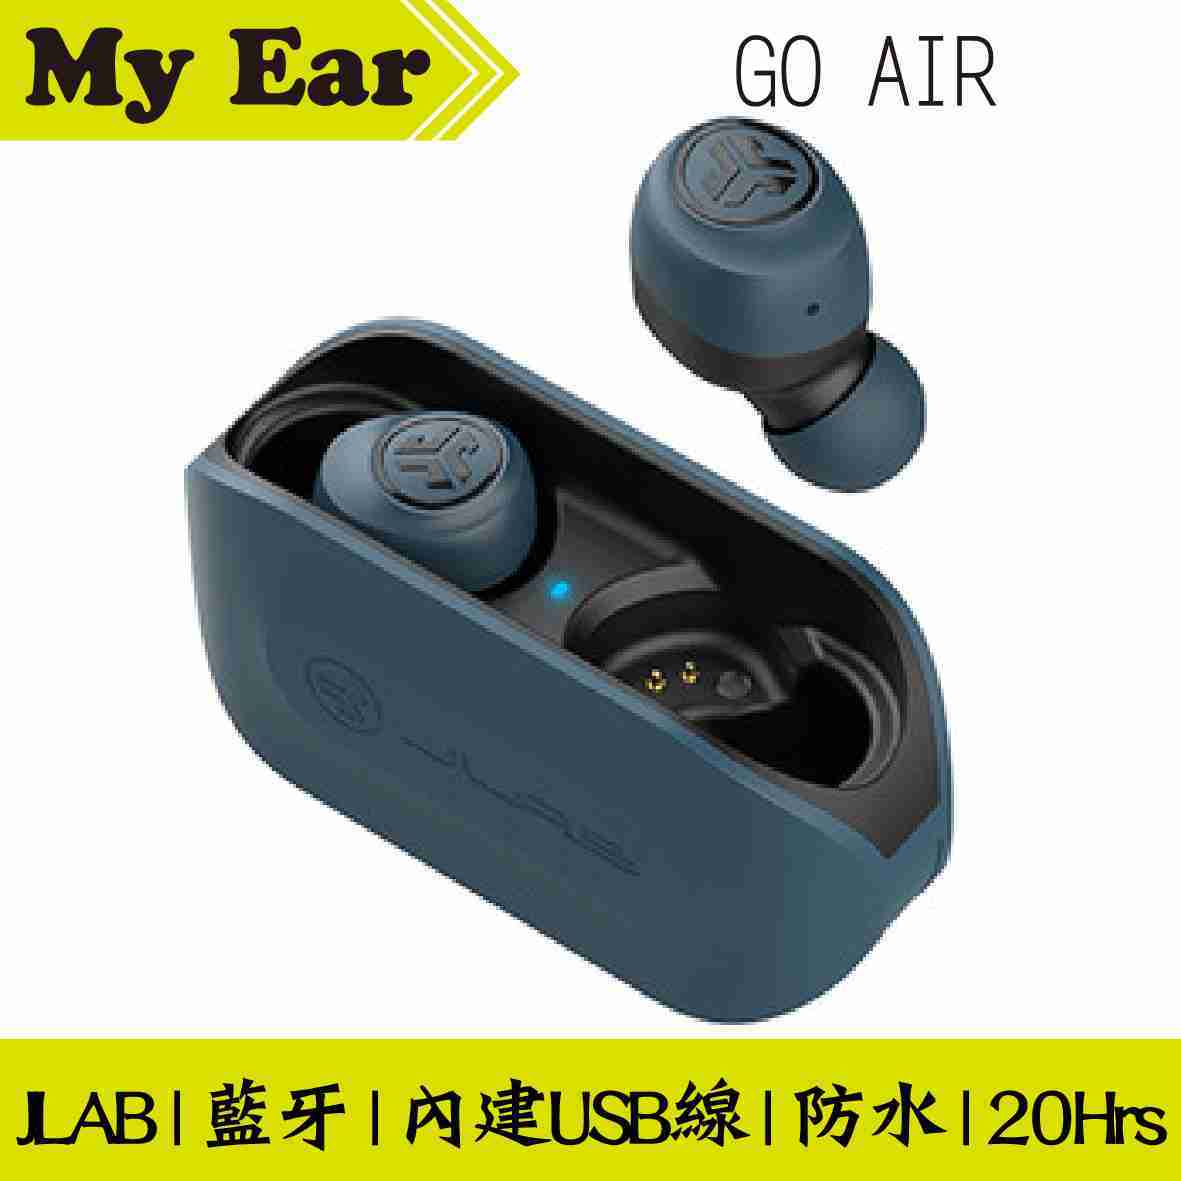 JLAB GO AIR 綠 藍芽耳機 真無線耳機 IP44 續航20Hrs | My Ear耳機專門店